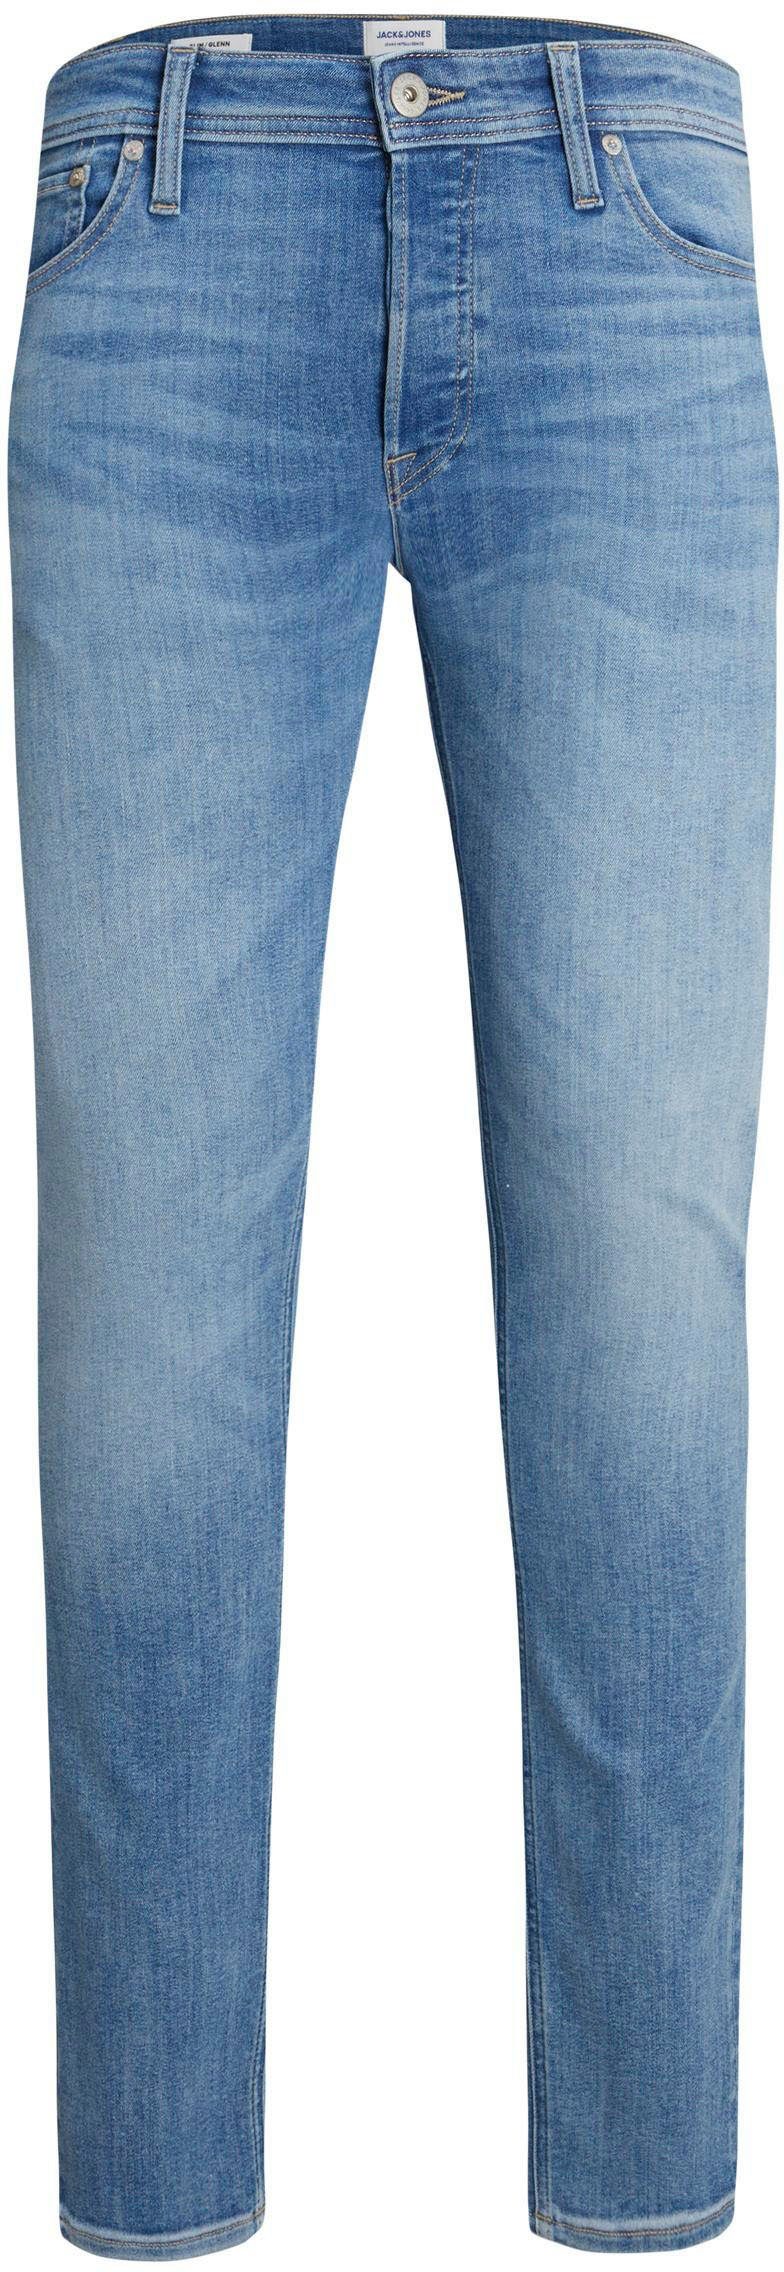 314 JJORIGINAL Jack light-blue-denim JJILIAM GE & Jones Skinny-fit-Jeans